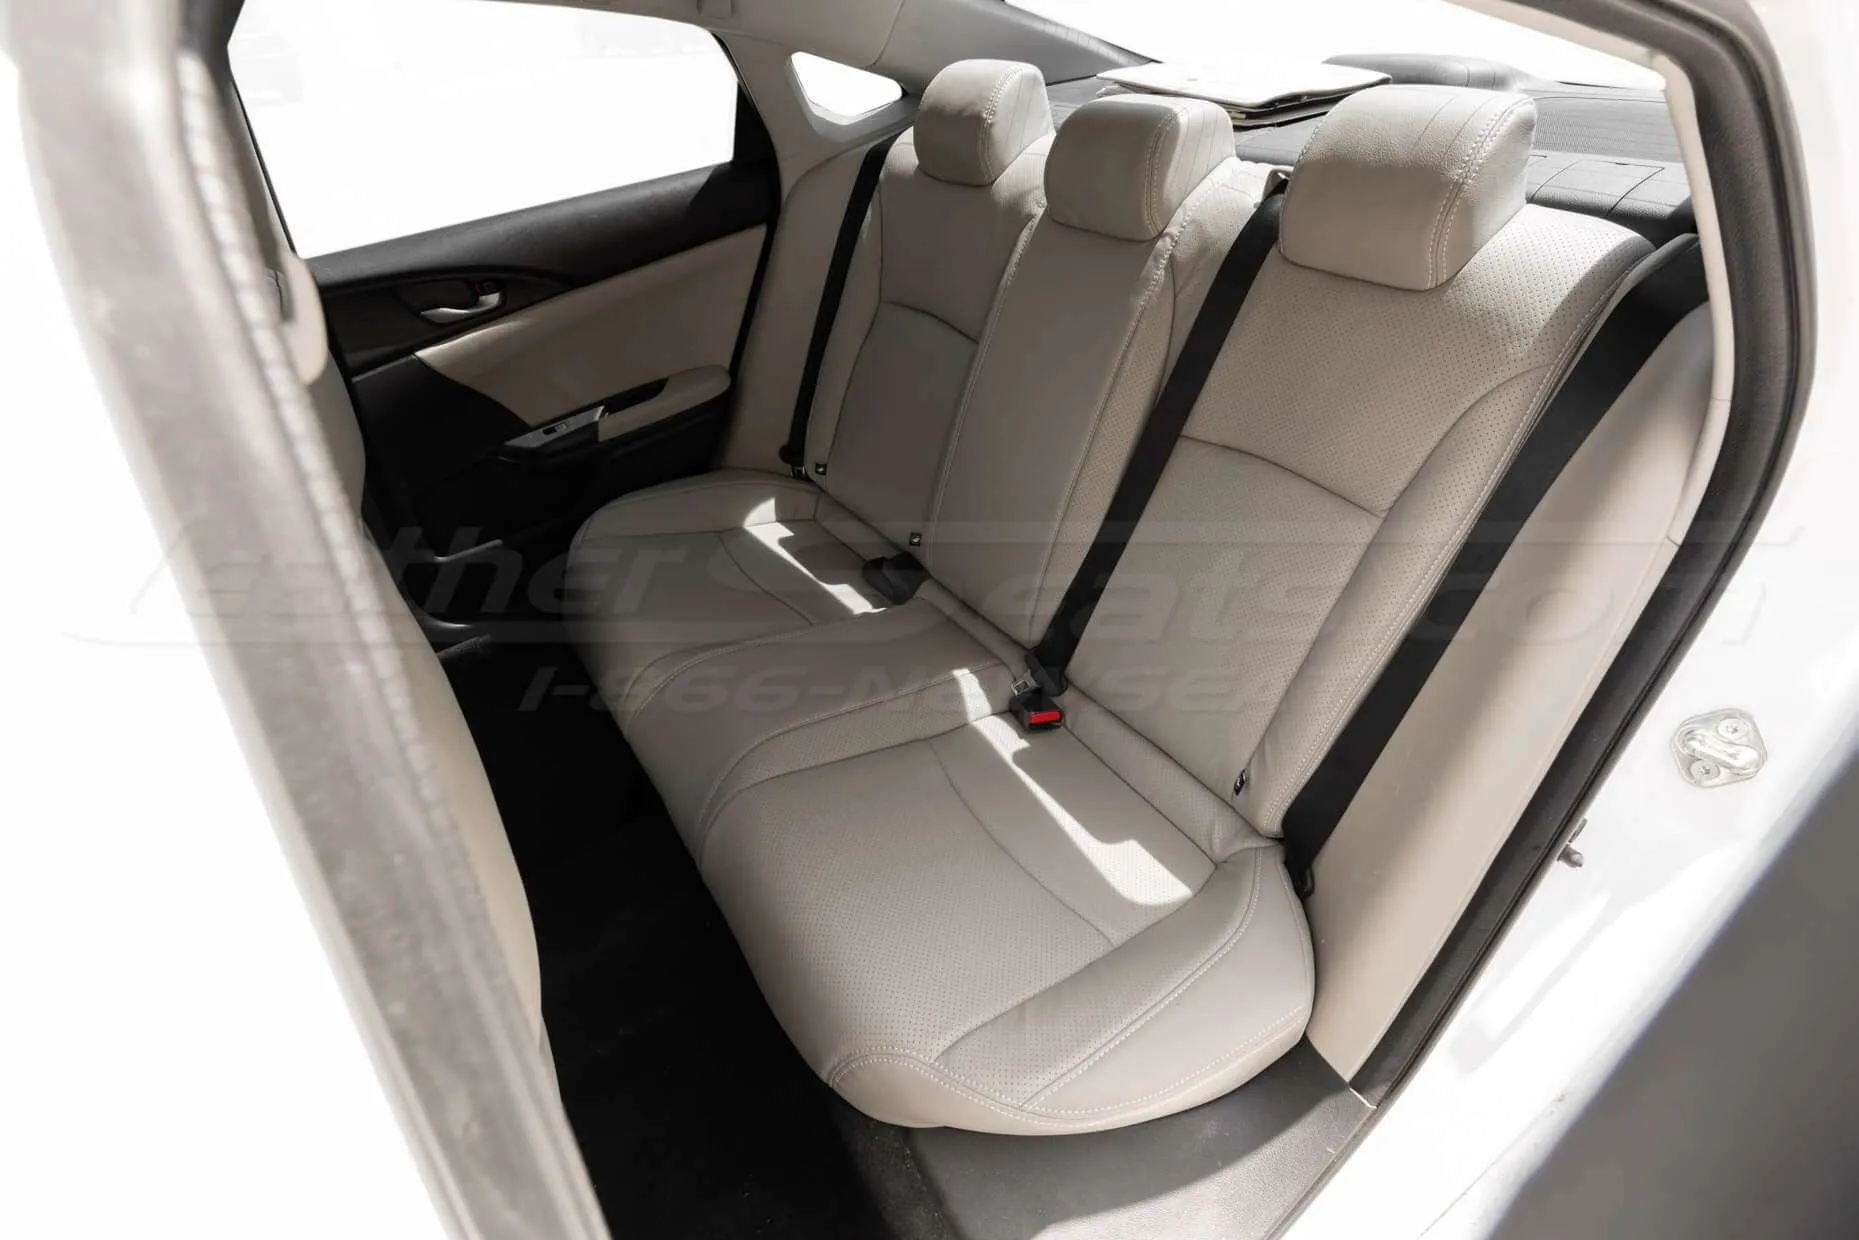 Honda Civic Sedan with custom leather seats - Rear seats from driver side